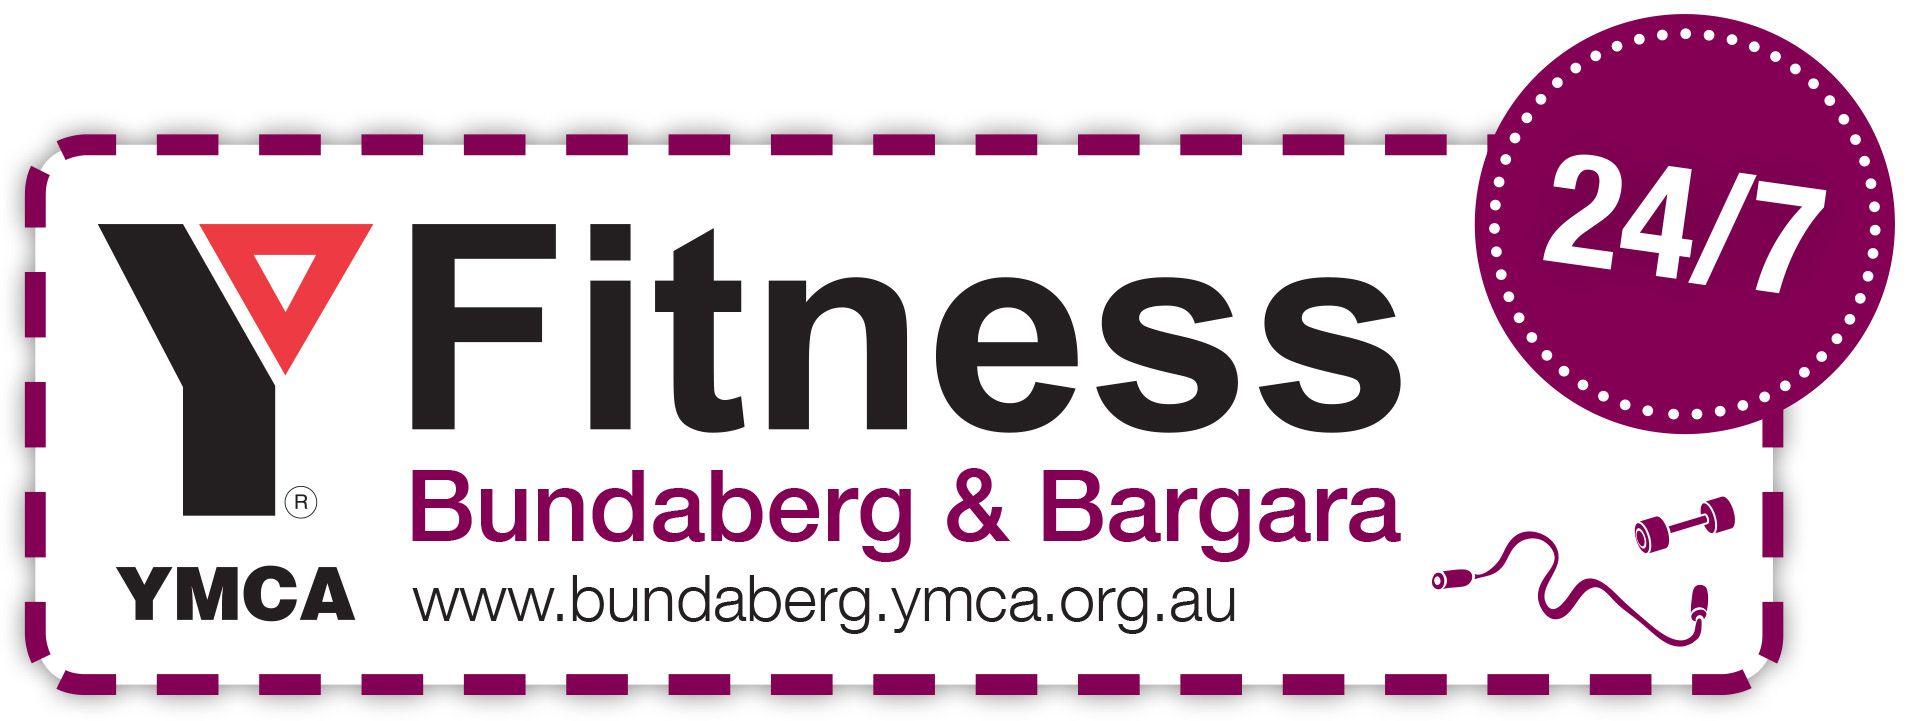 Purle YMCA Logo - YMCA Bundaberg Fitness Bundaberg 24 7